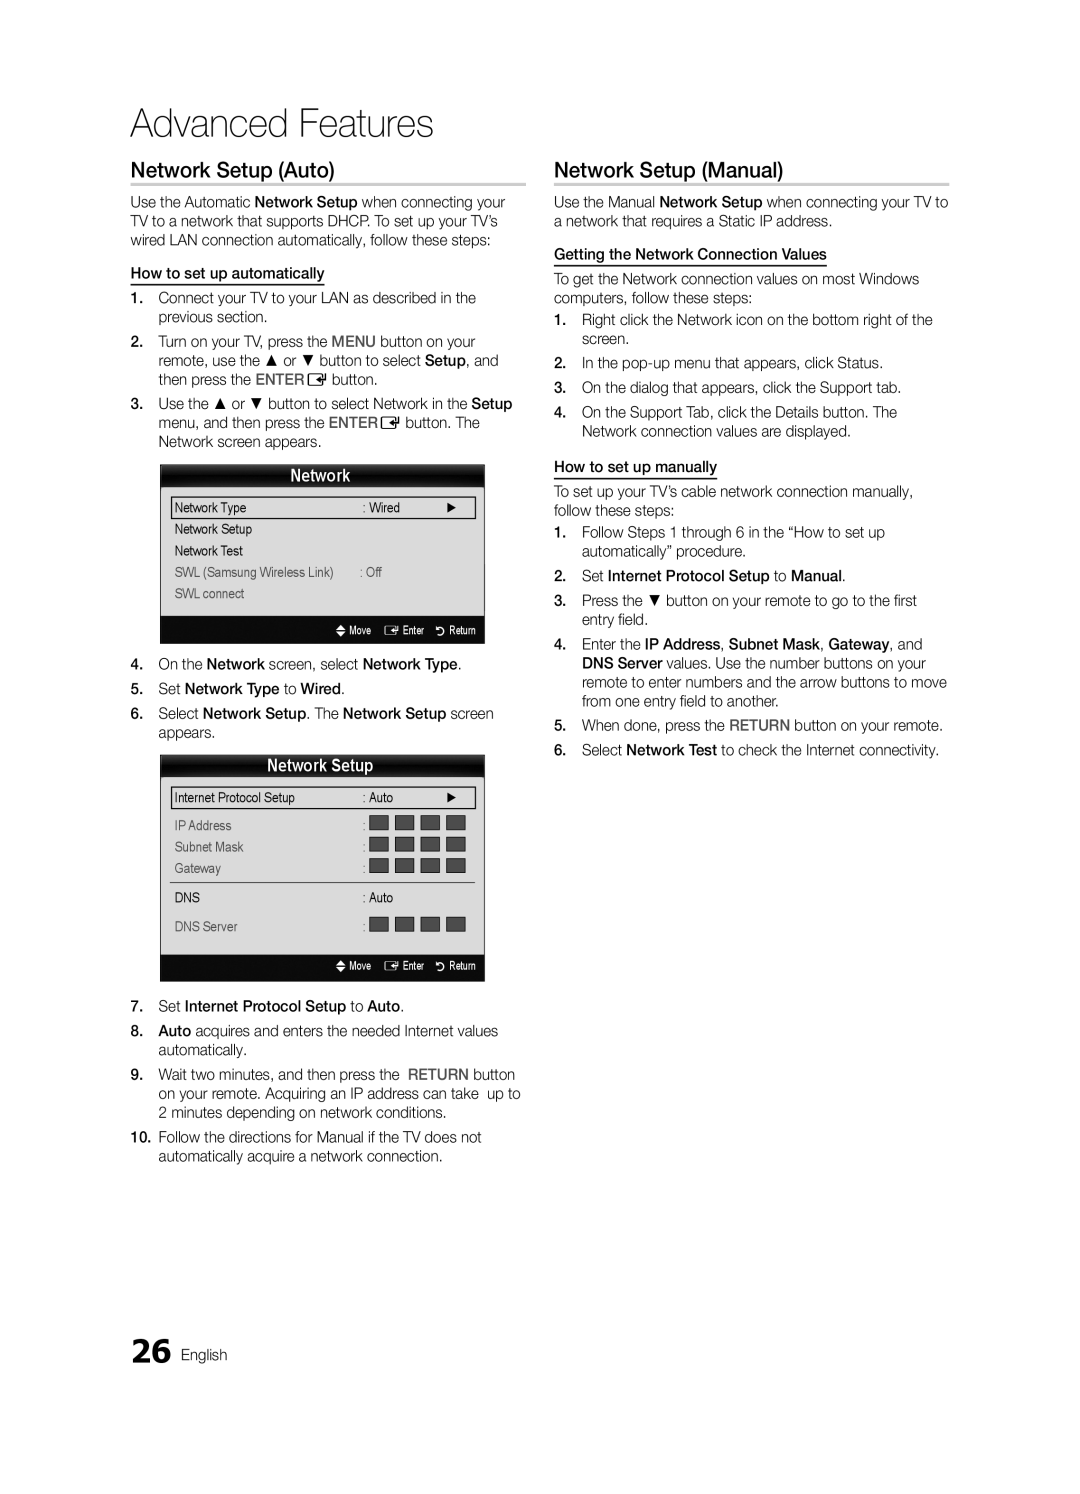 Samsung 6800 user manual Network Setup Auto, Network Setup Manual, Advanced Features 